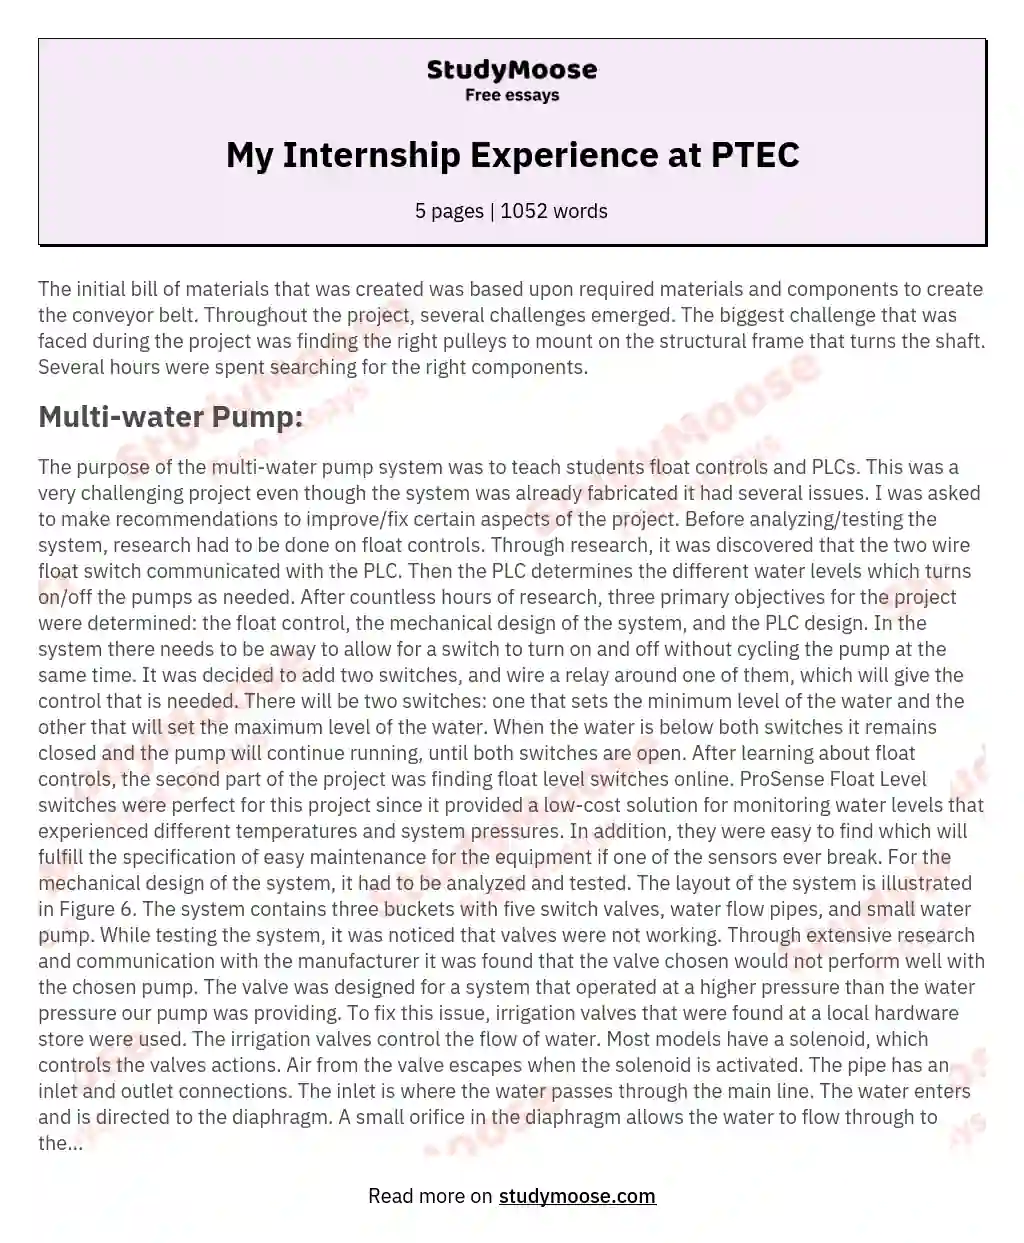 My Internship Experience at PTEC essay